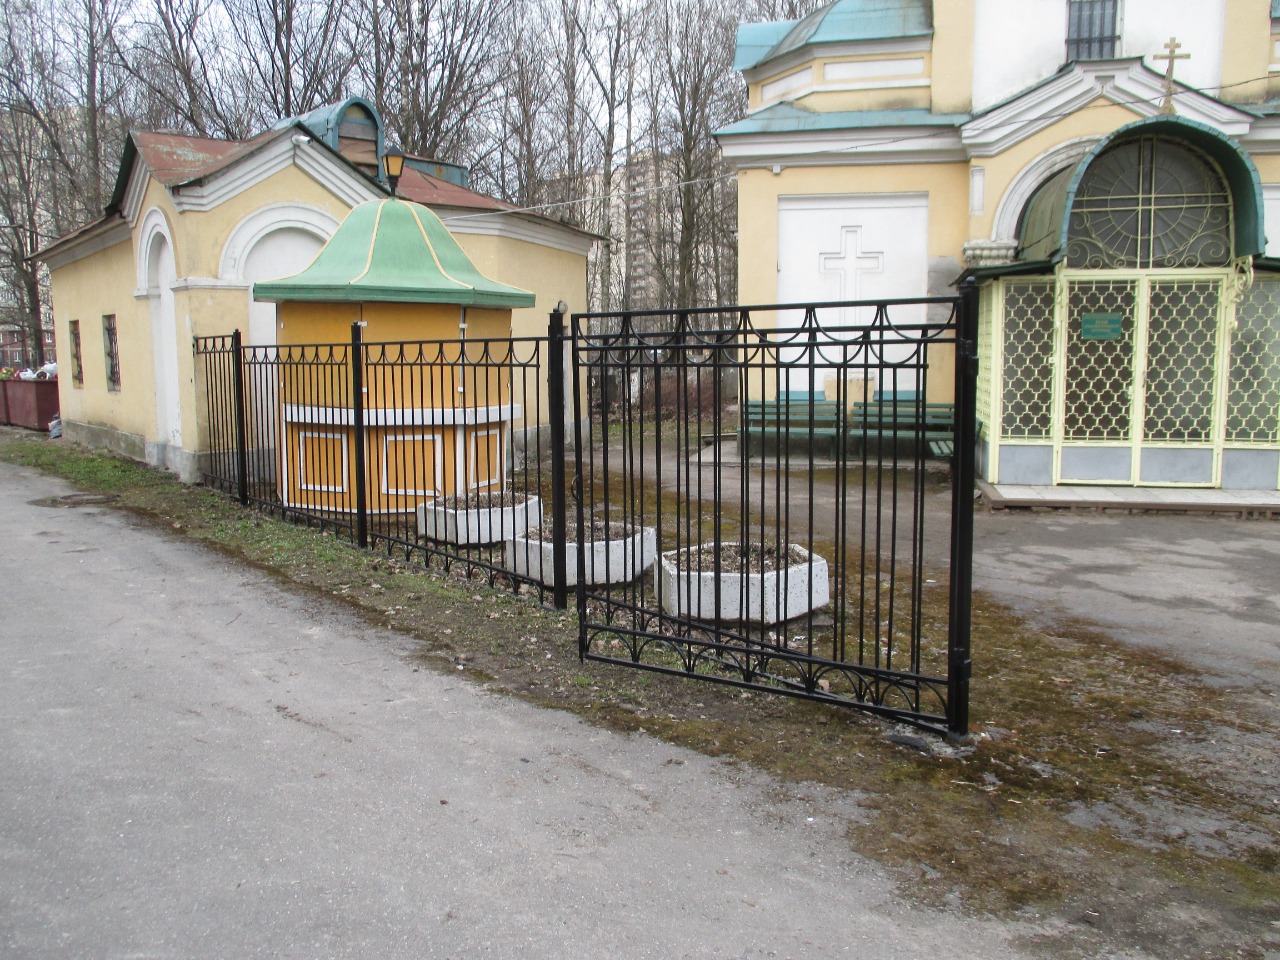 Казанское кладбище